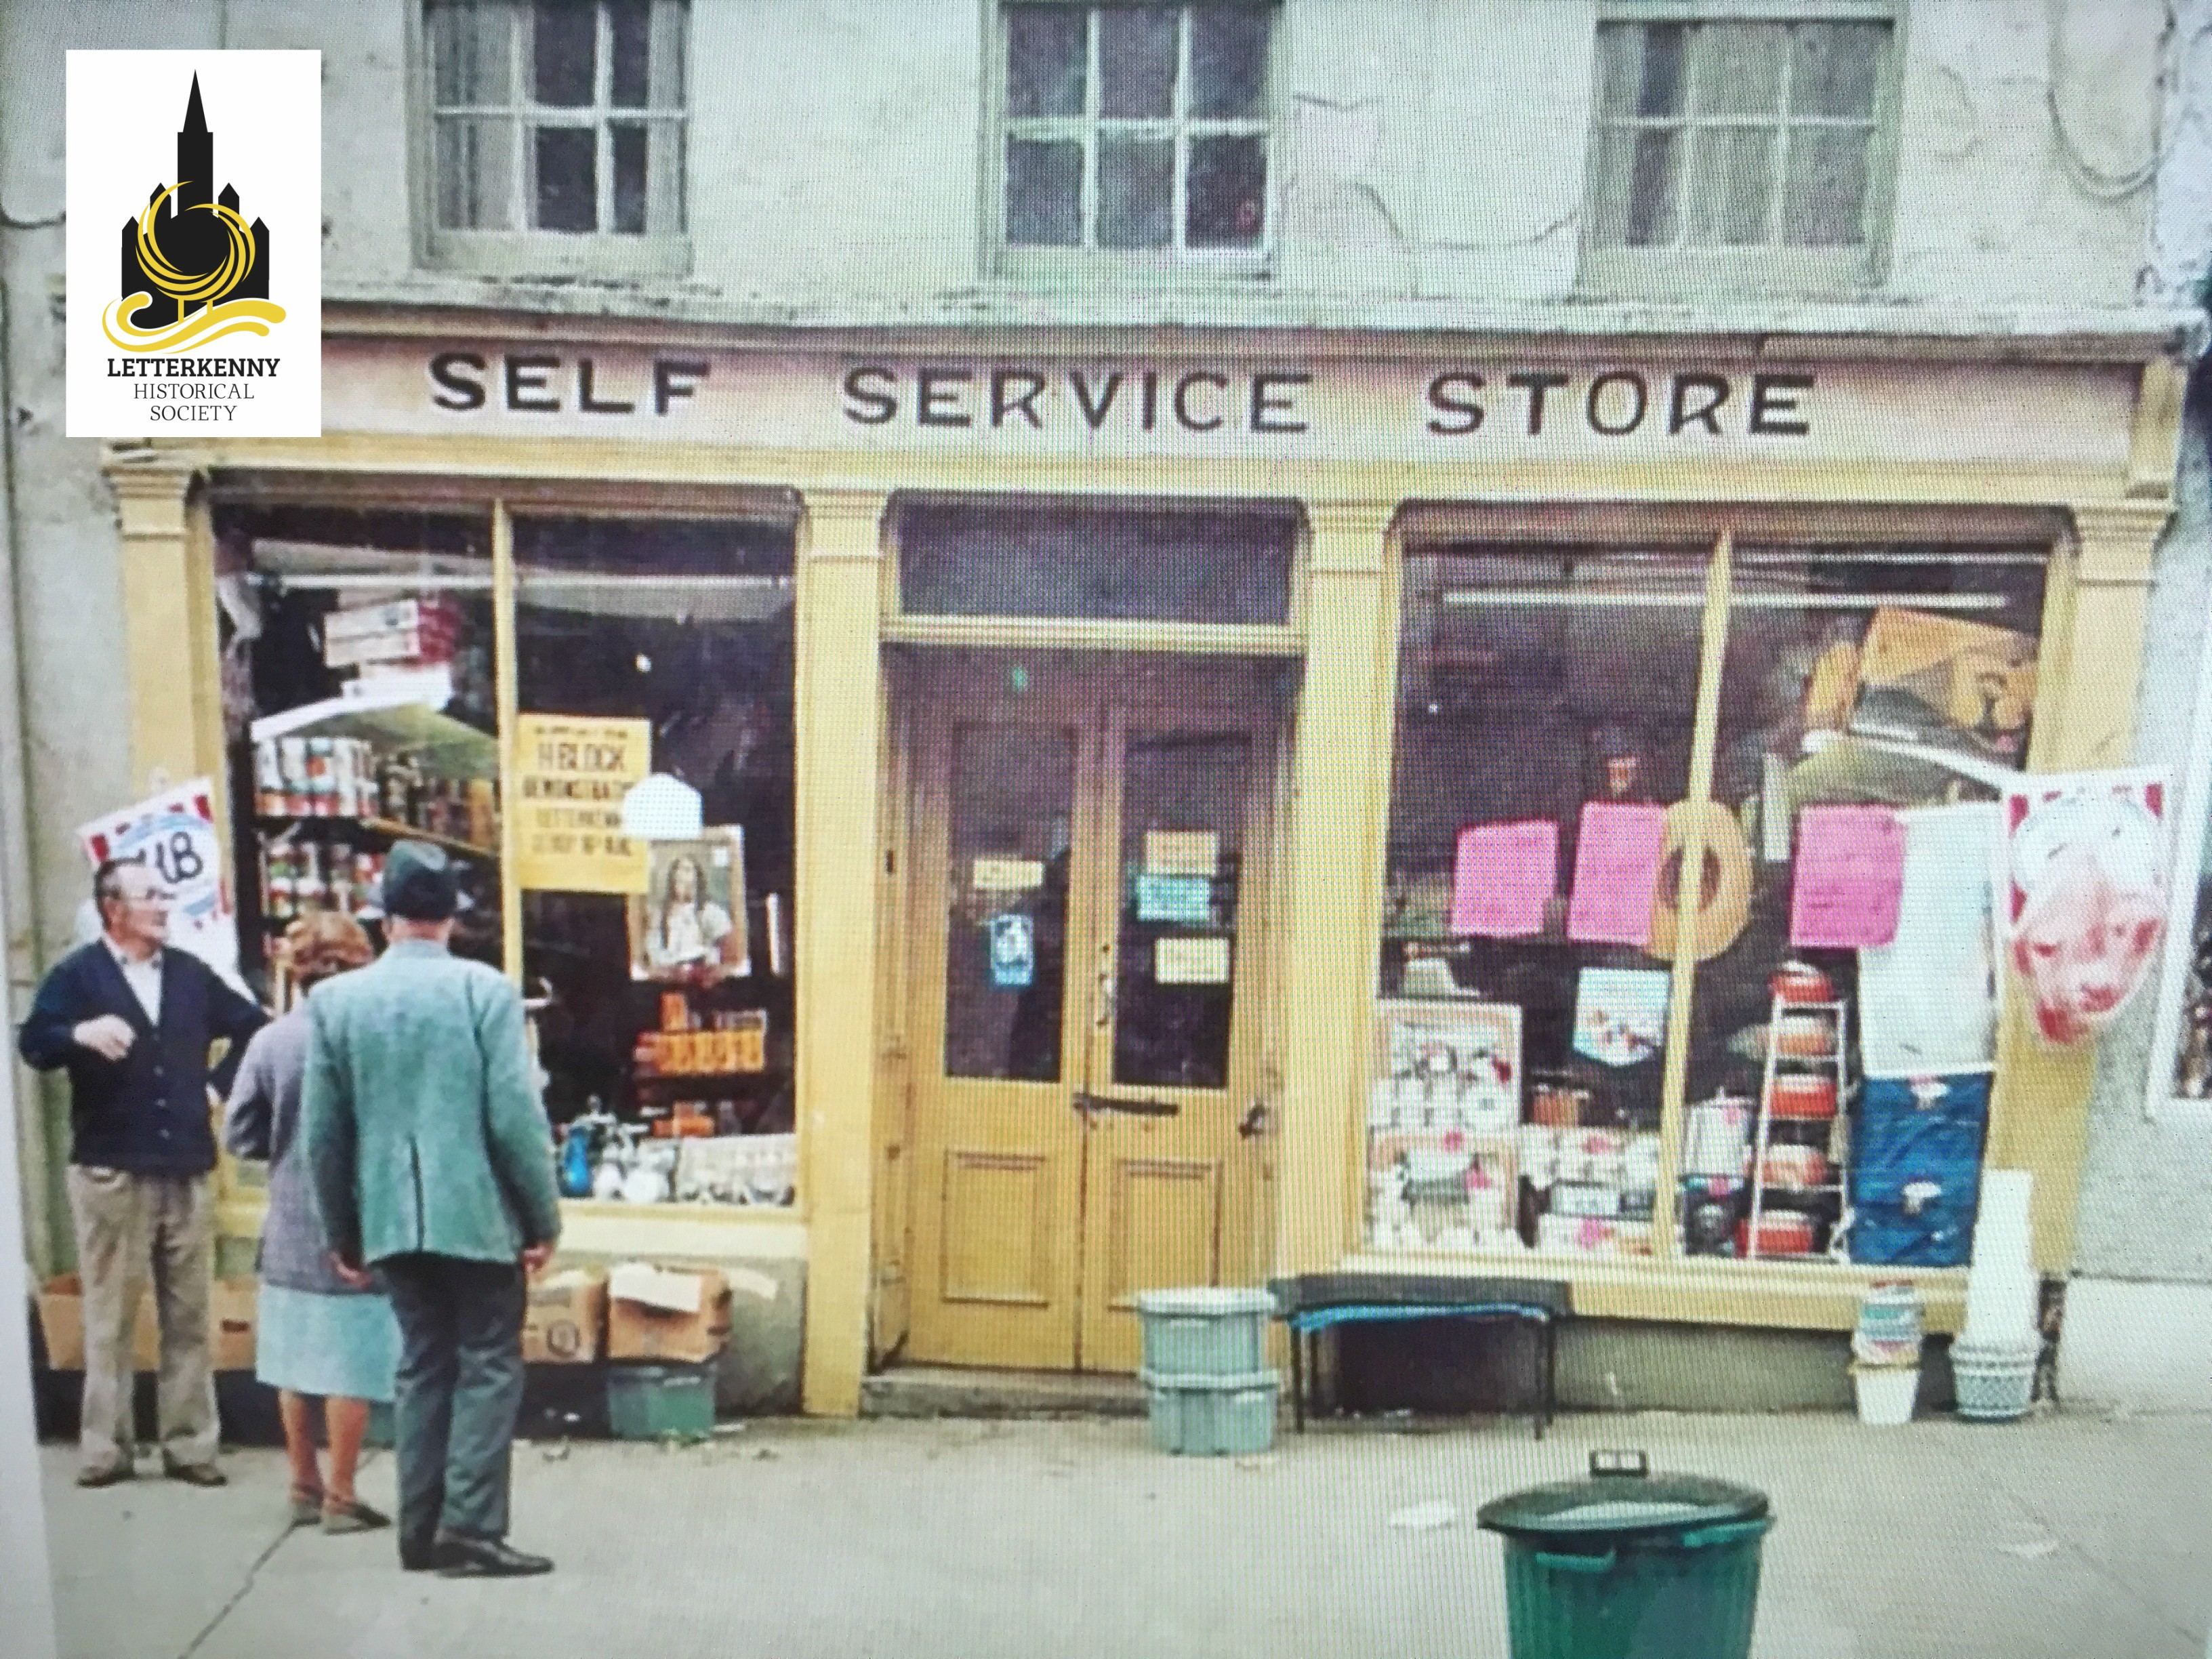 Joe 'Bid' Gallagher's Self Service Store